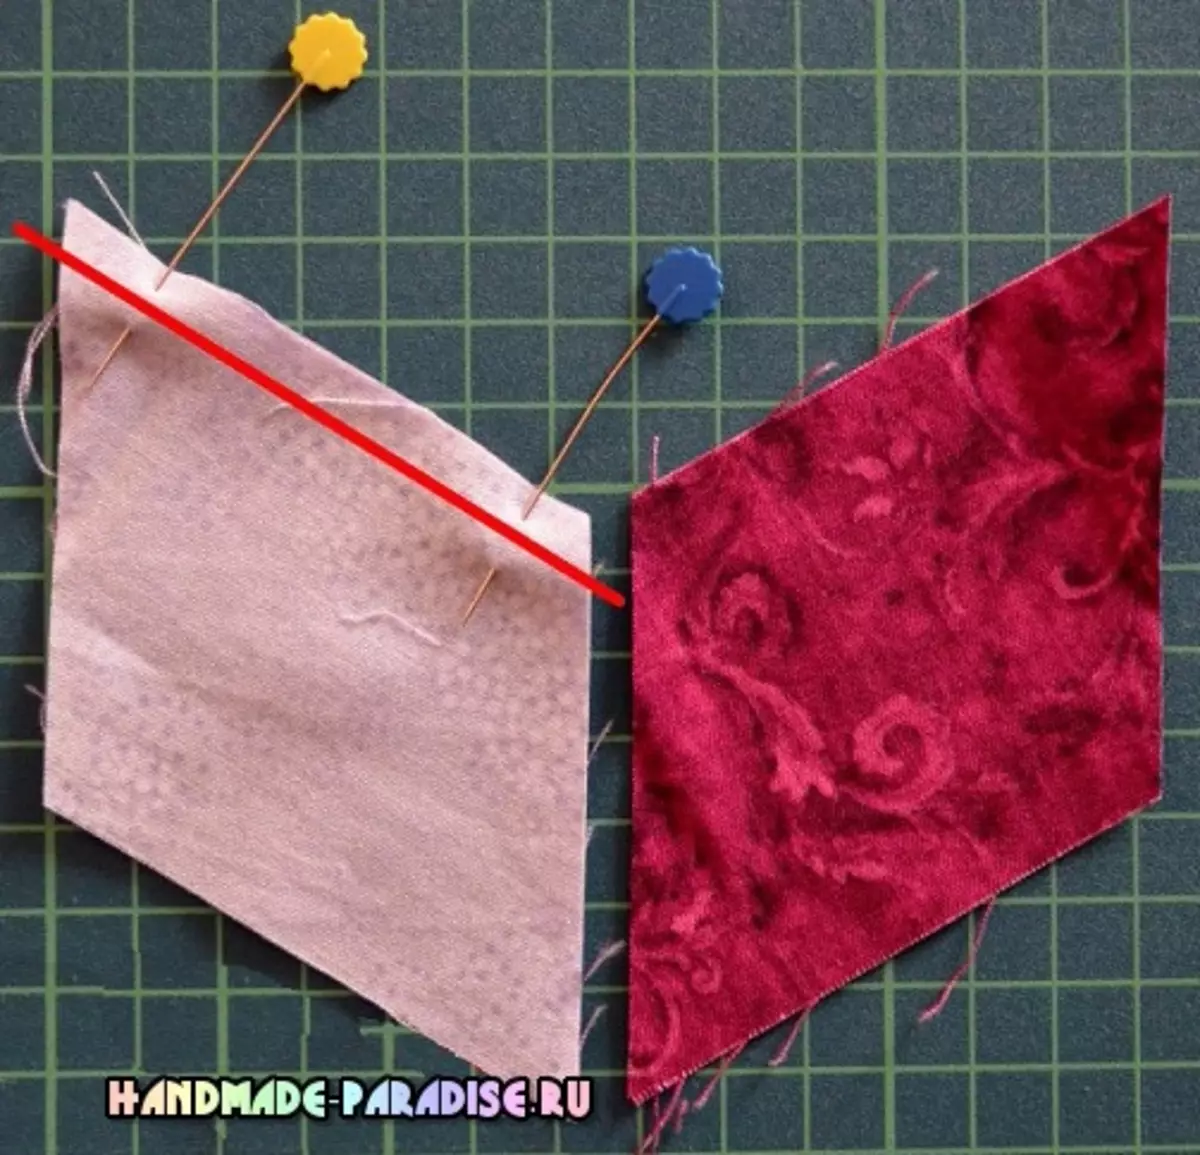 Patchwork技术中的拼凑而成的“立方体”毯子